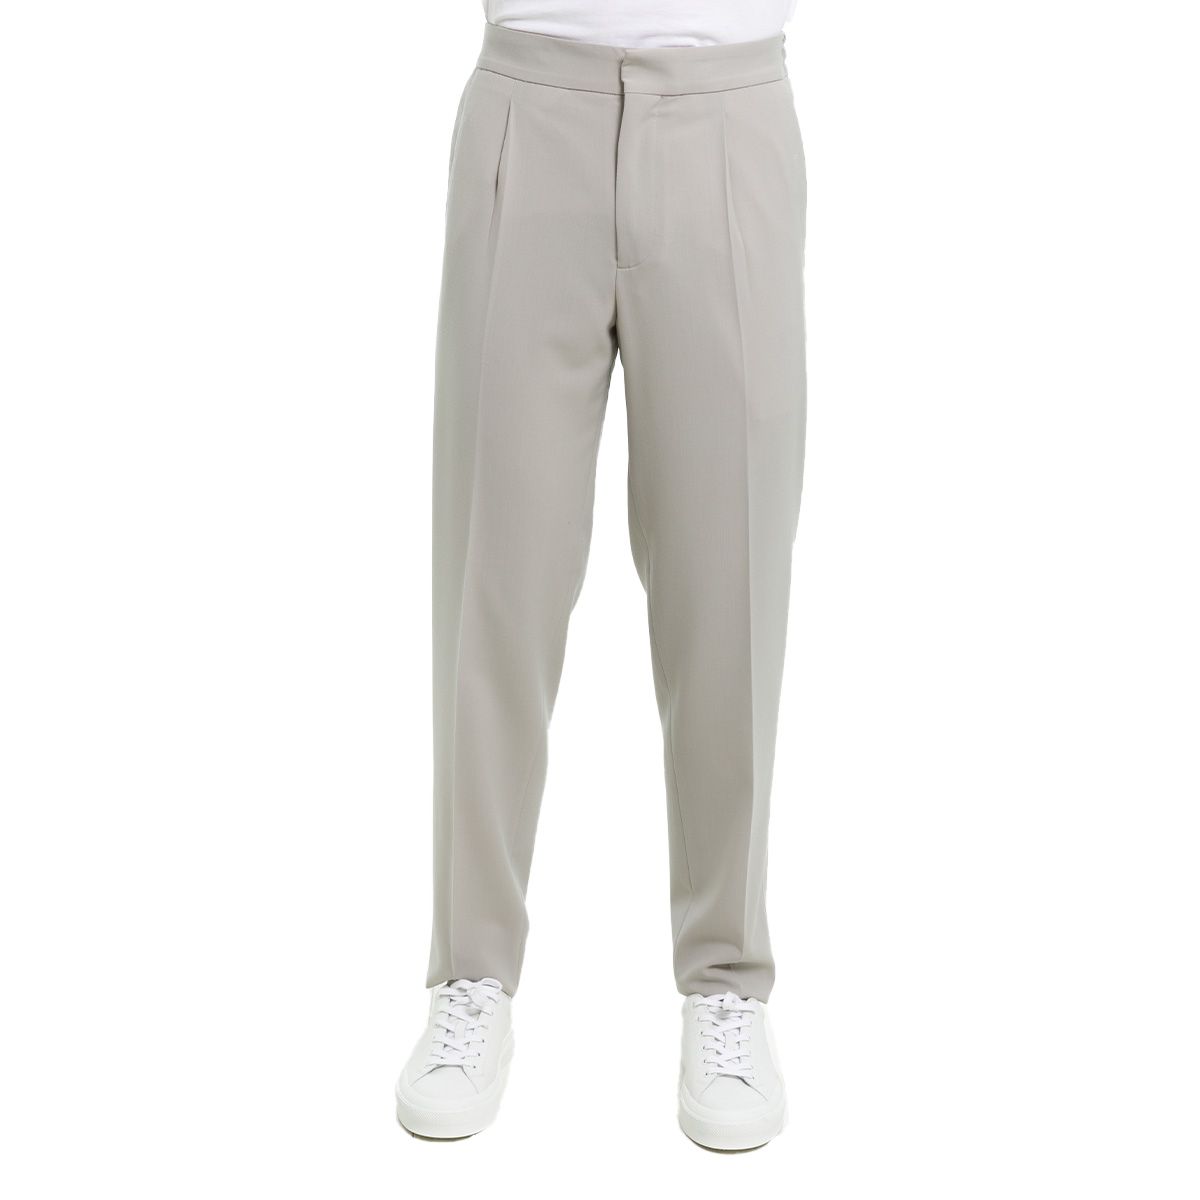 Grey Chino Elastic Trousers